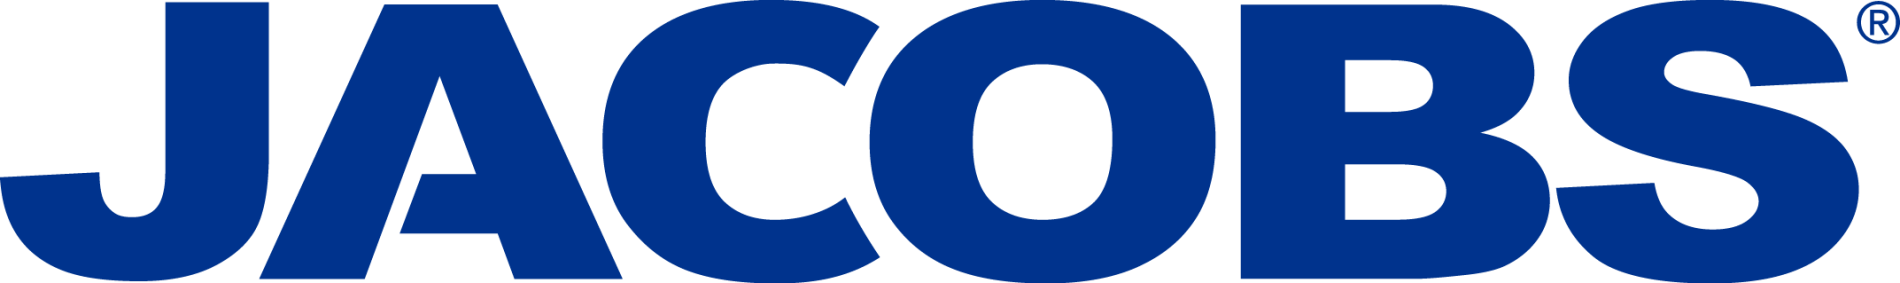 Jacobs-Logo_Blue_RGB